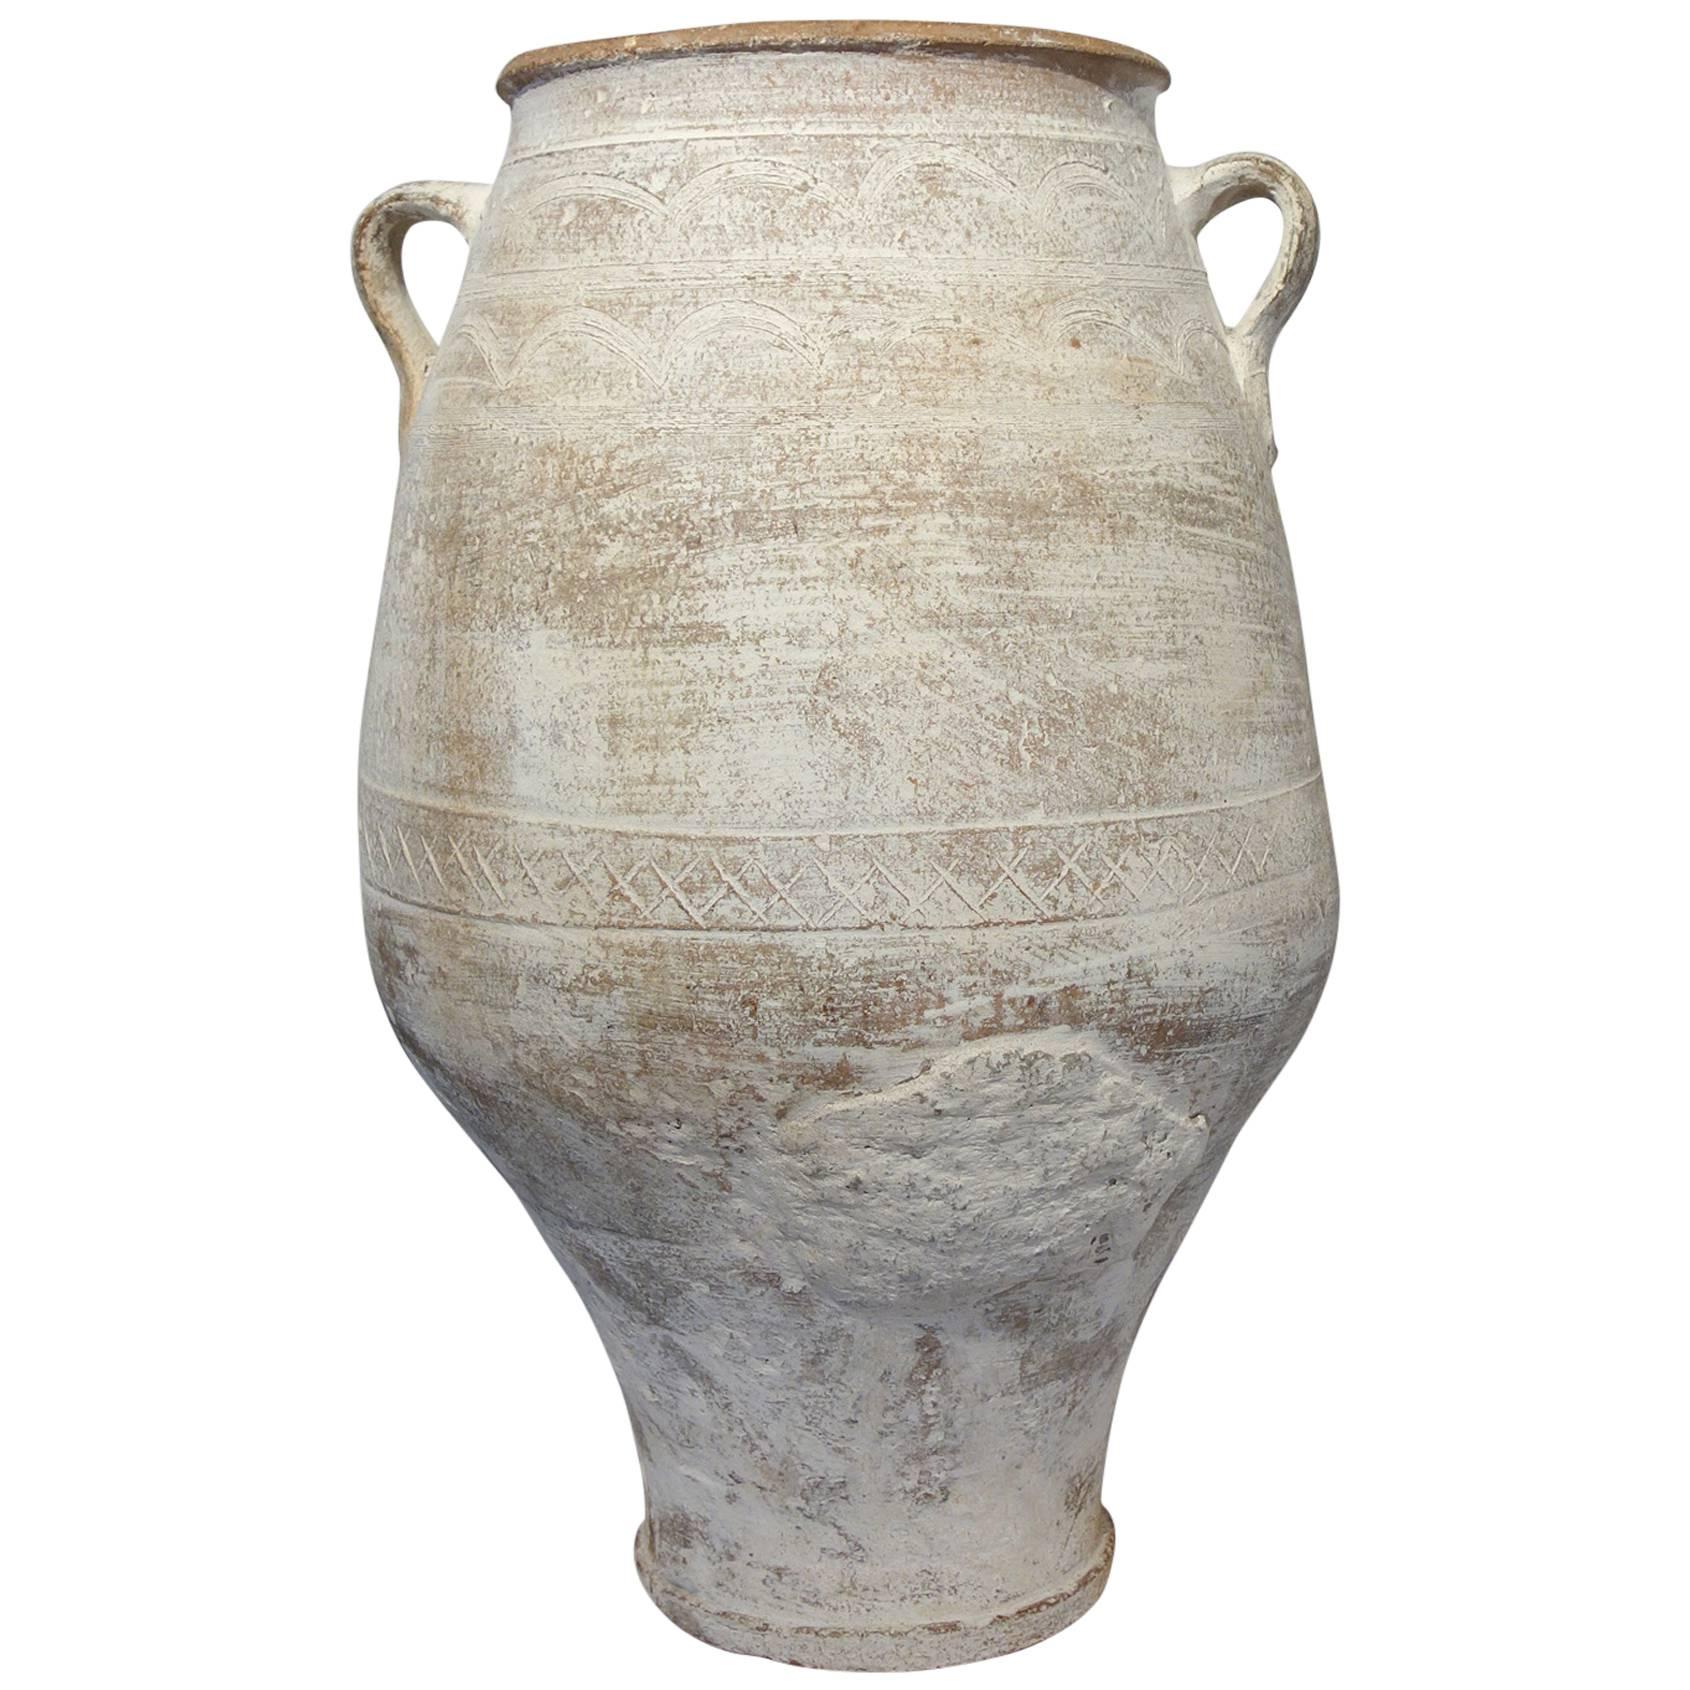 19th Century Mediterranean Terracotta Amphora Jar with White Patina and Handles